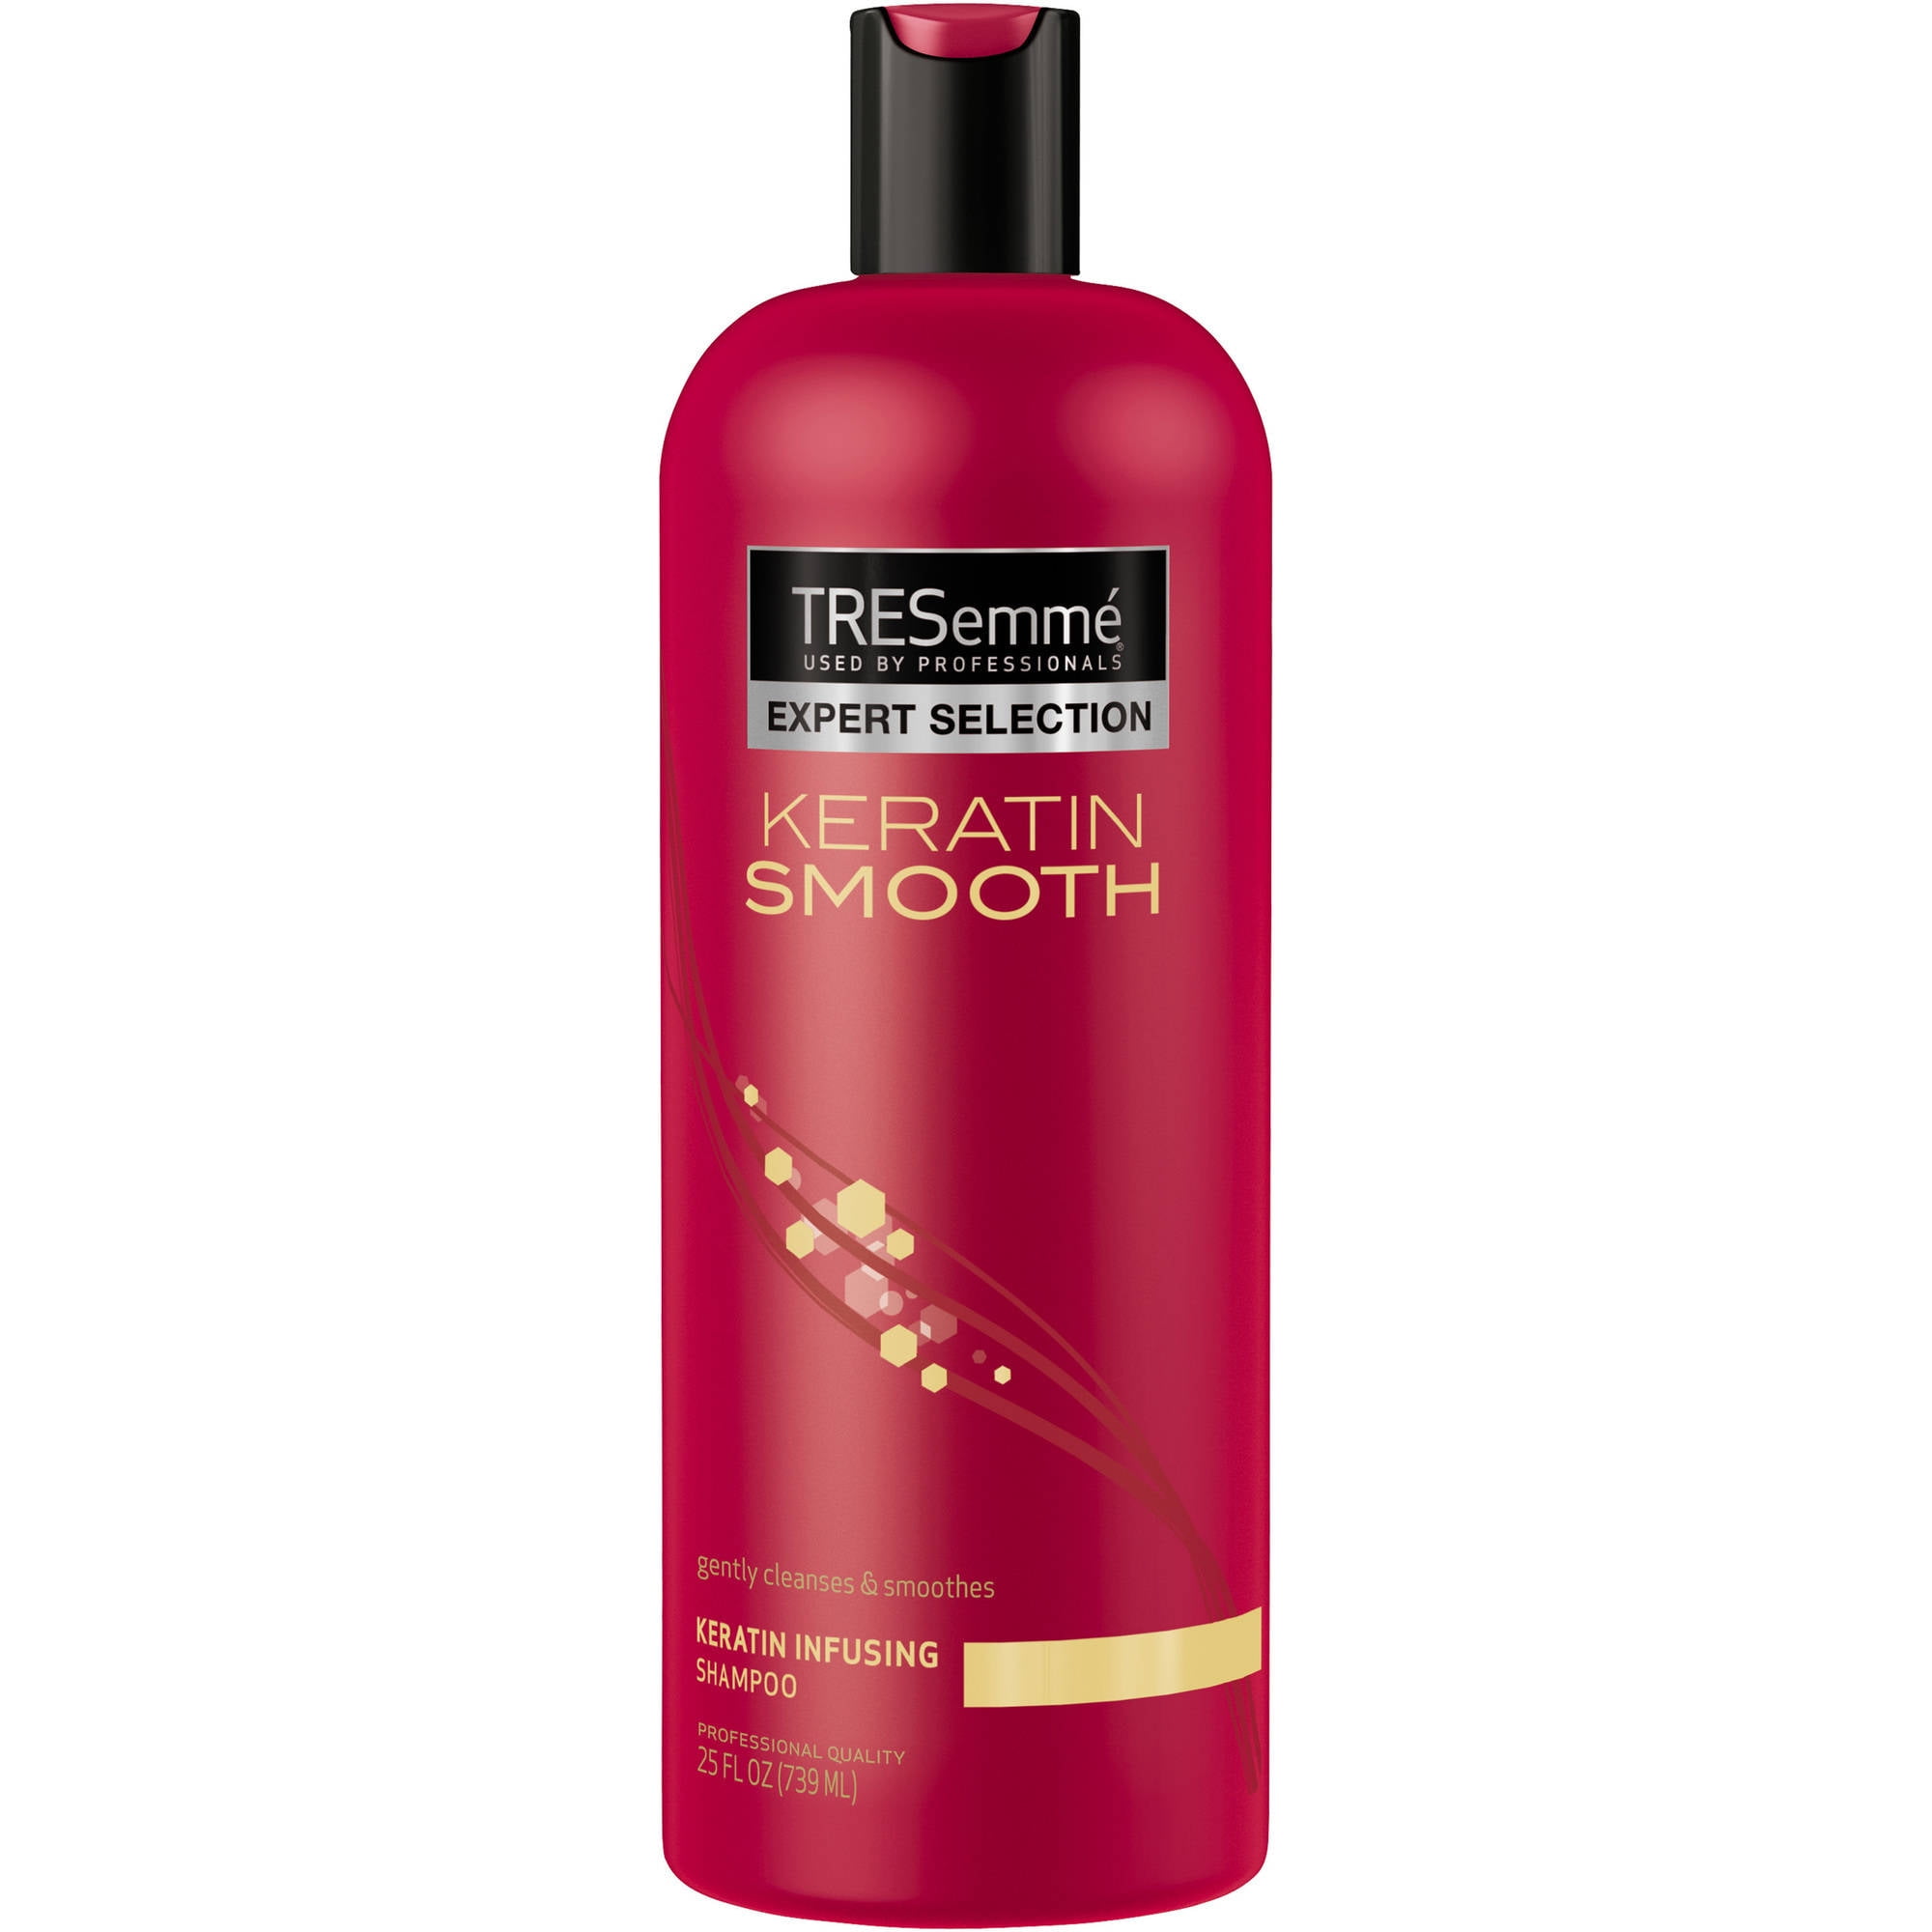 Læge biologi TVstation Tresemme Expert Selection Shampoo Keratin Smooth, 25 oz - Walmart.com